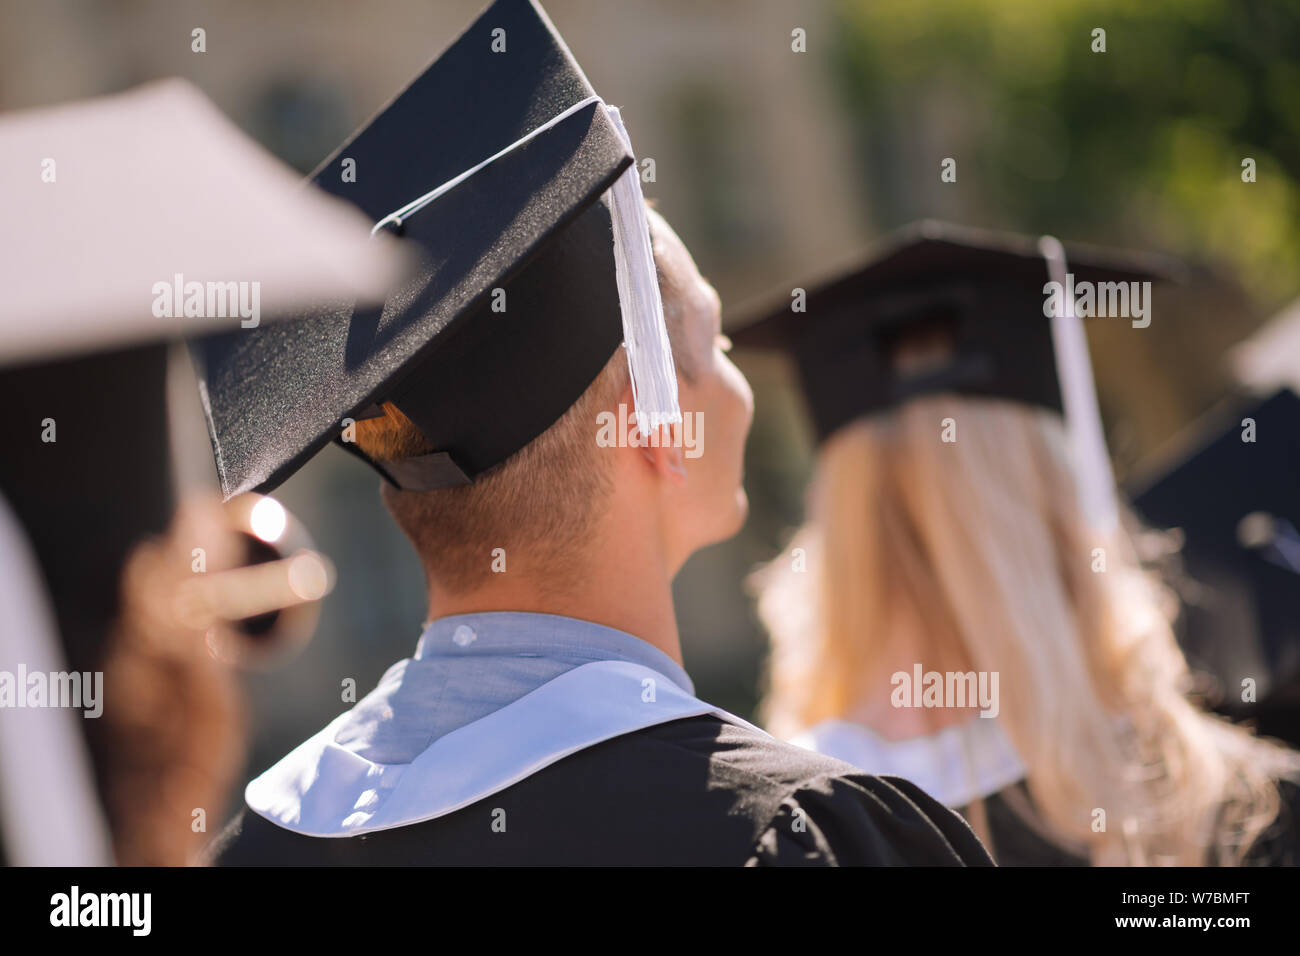 Young graduates wearing masters capes receiving diplomas. Stock Photo